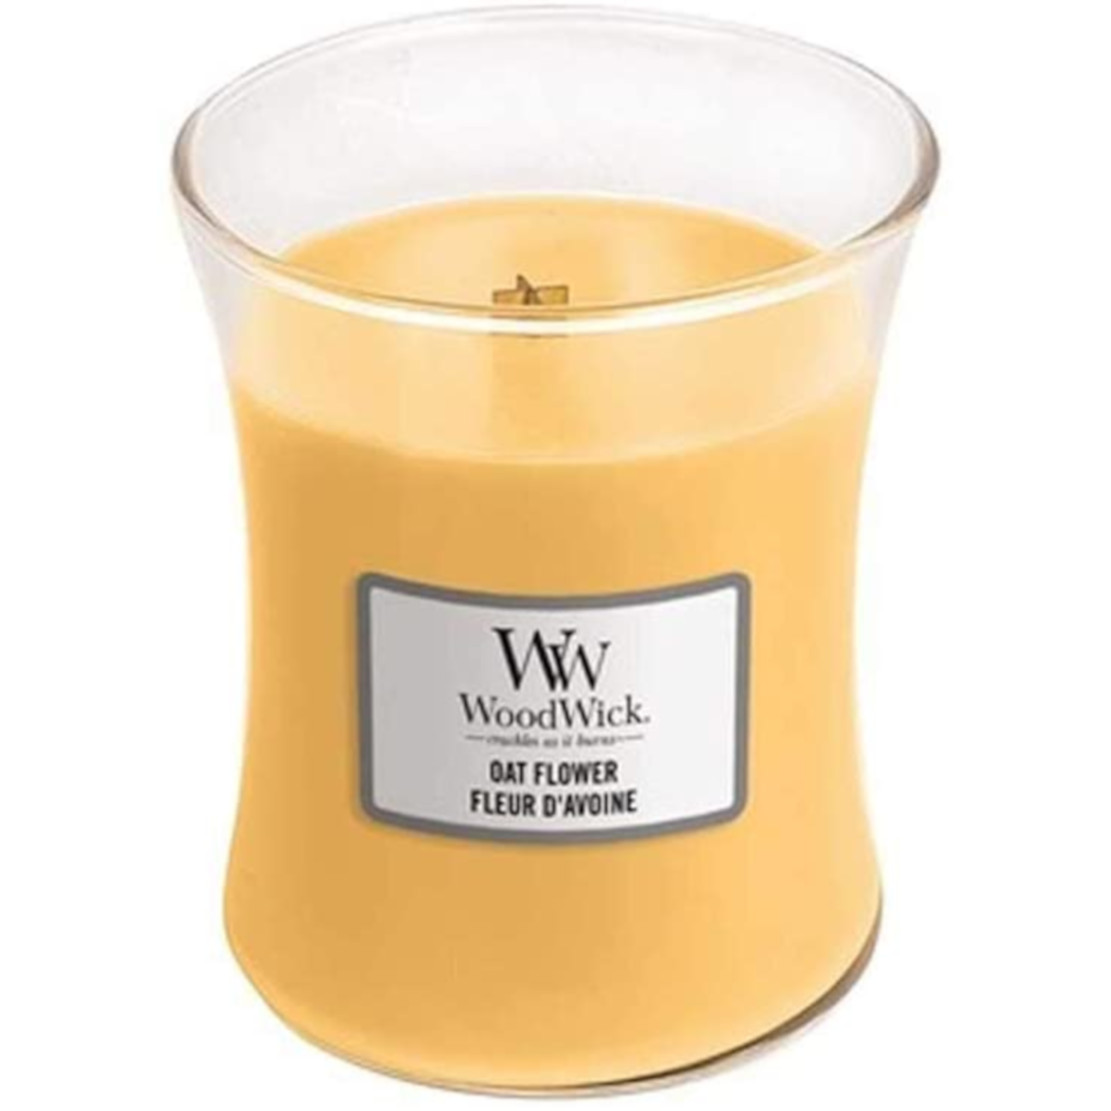 Woodwick Oat flower Medium Jar Candle